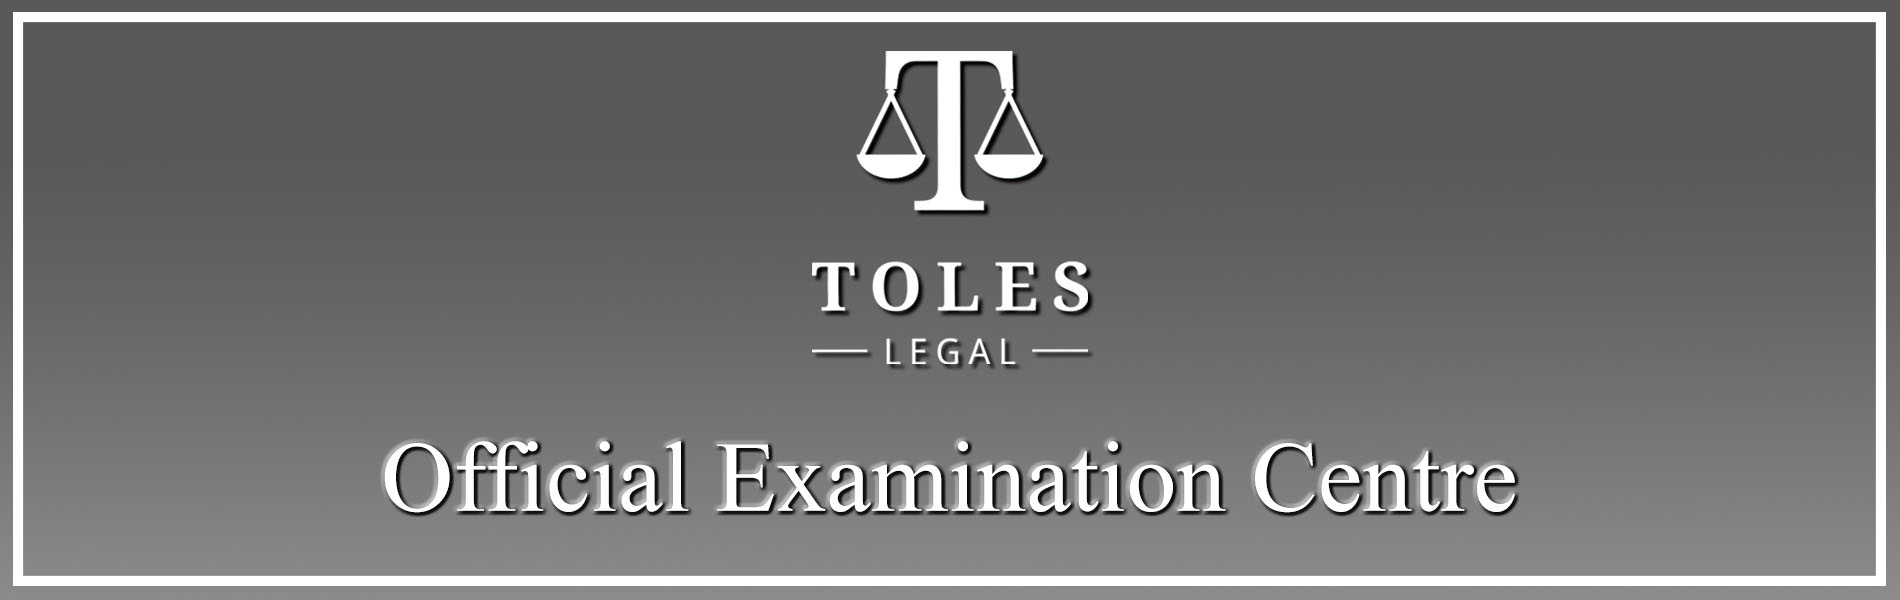 TOLES Legal